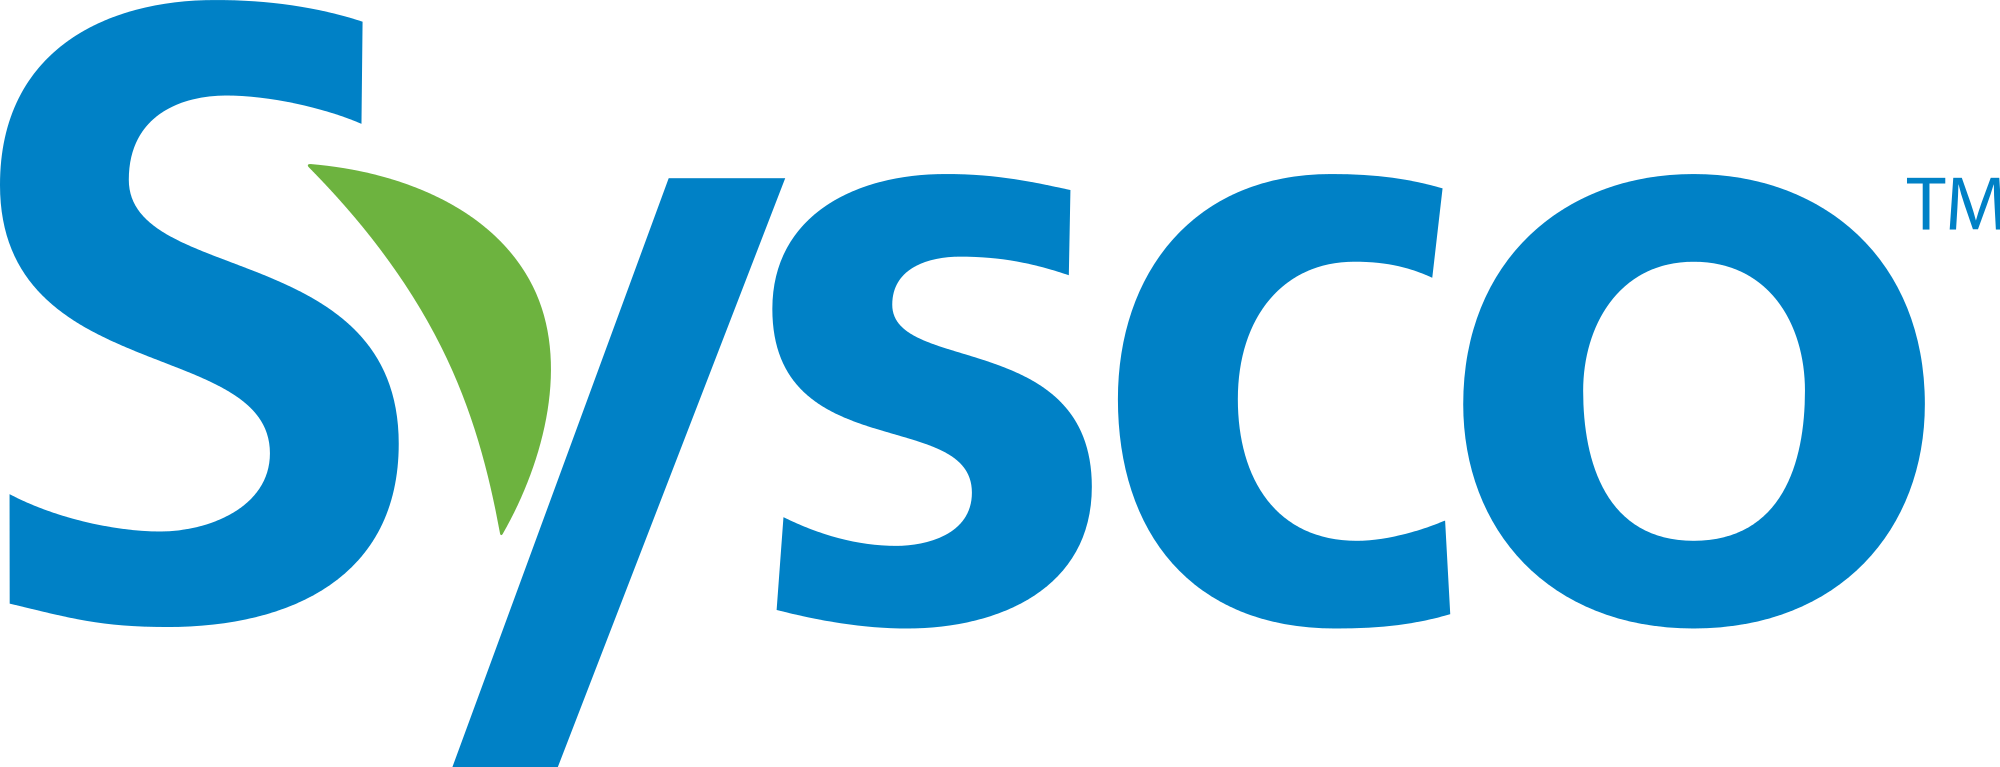 Sysco Logos